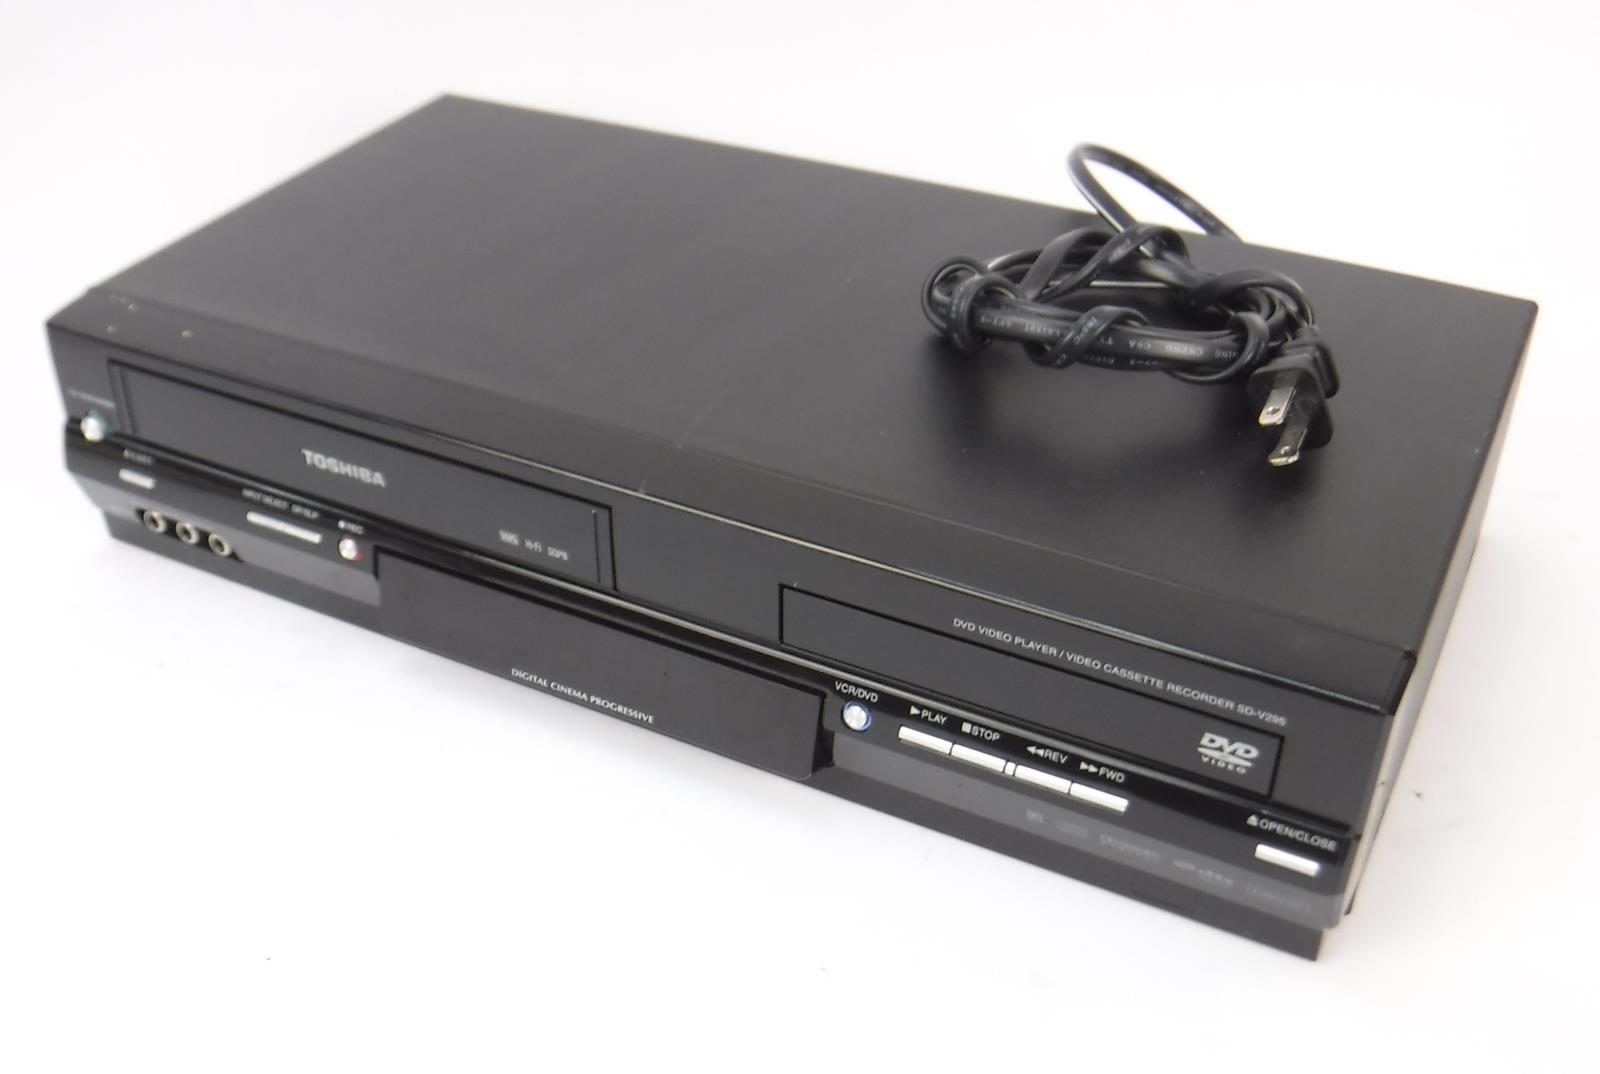 Toshiba SD-V295KU DVD Video Player VCR Video Cassette Recorder